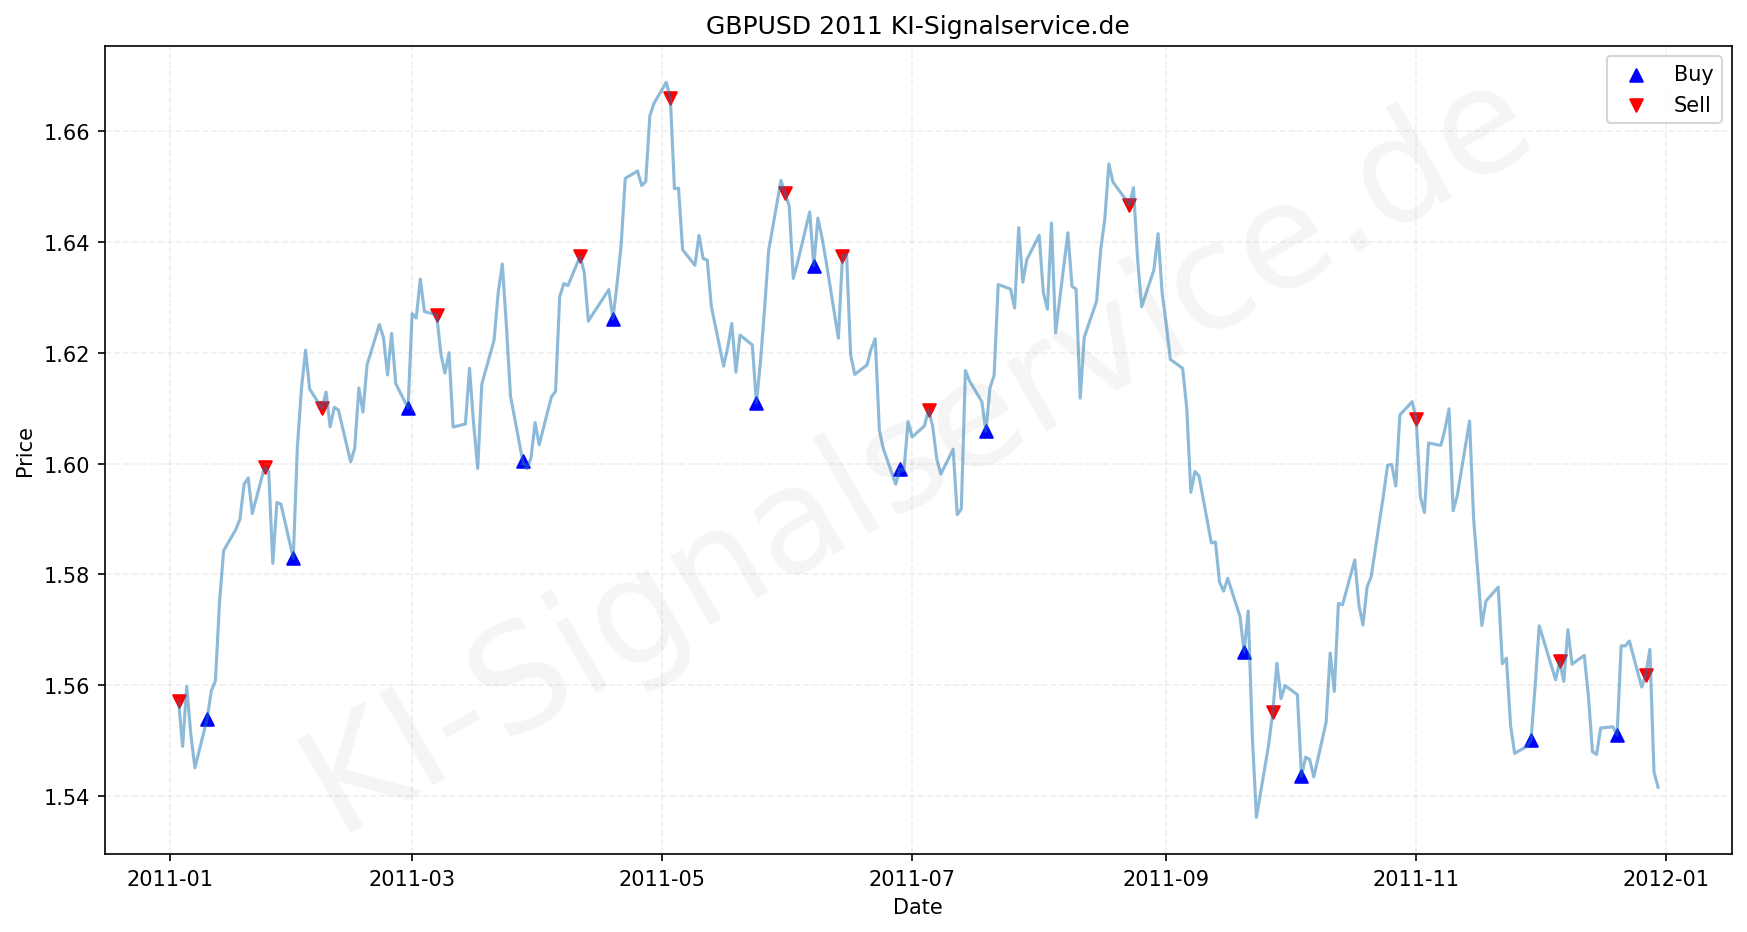 GBPUSD Chart - KI Tradingsignale 2011